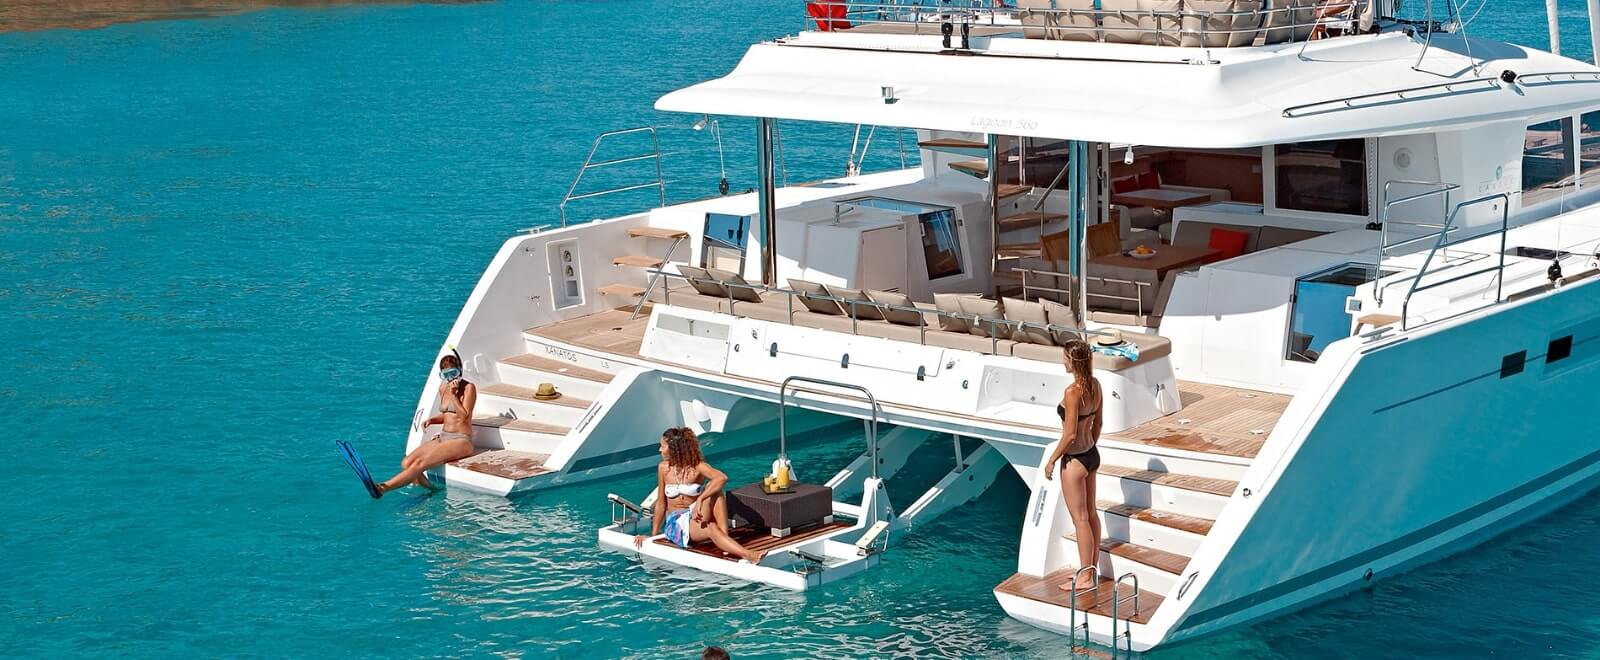 luxury-yacht-diving-thailand